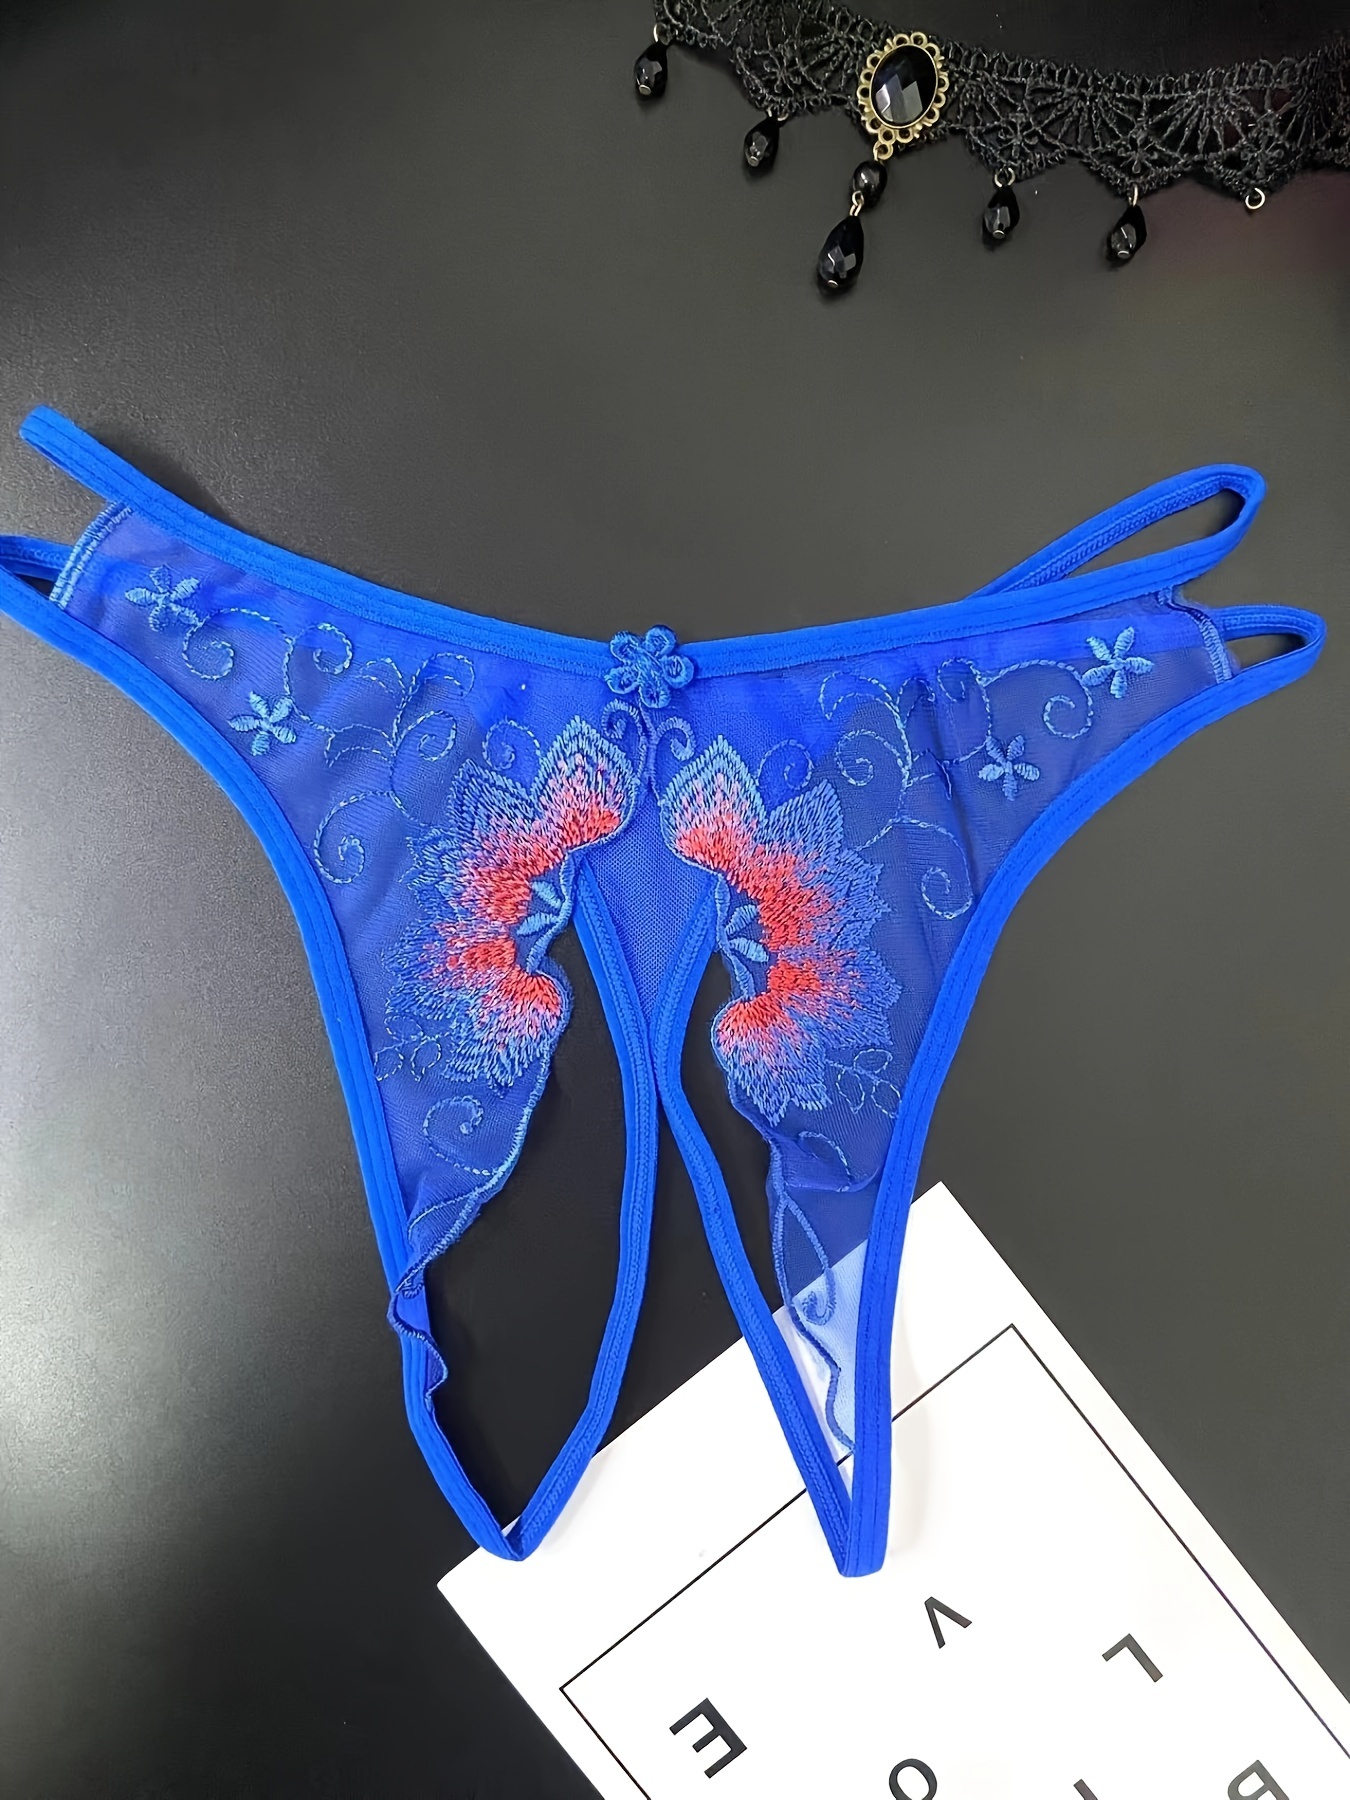 Sheer G String Micro Thong Lingerie See Through Panties Mini Bikini G-string  Mesh Panty Sexy Gifts for Her -  Canada